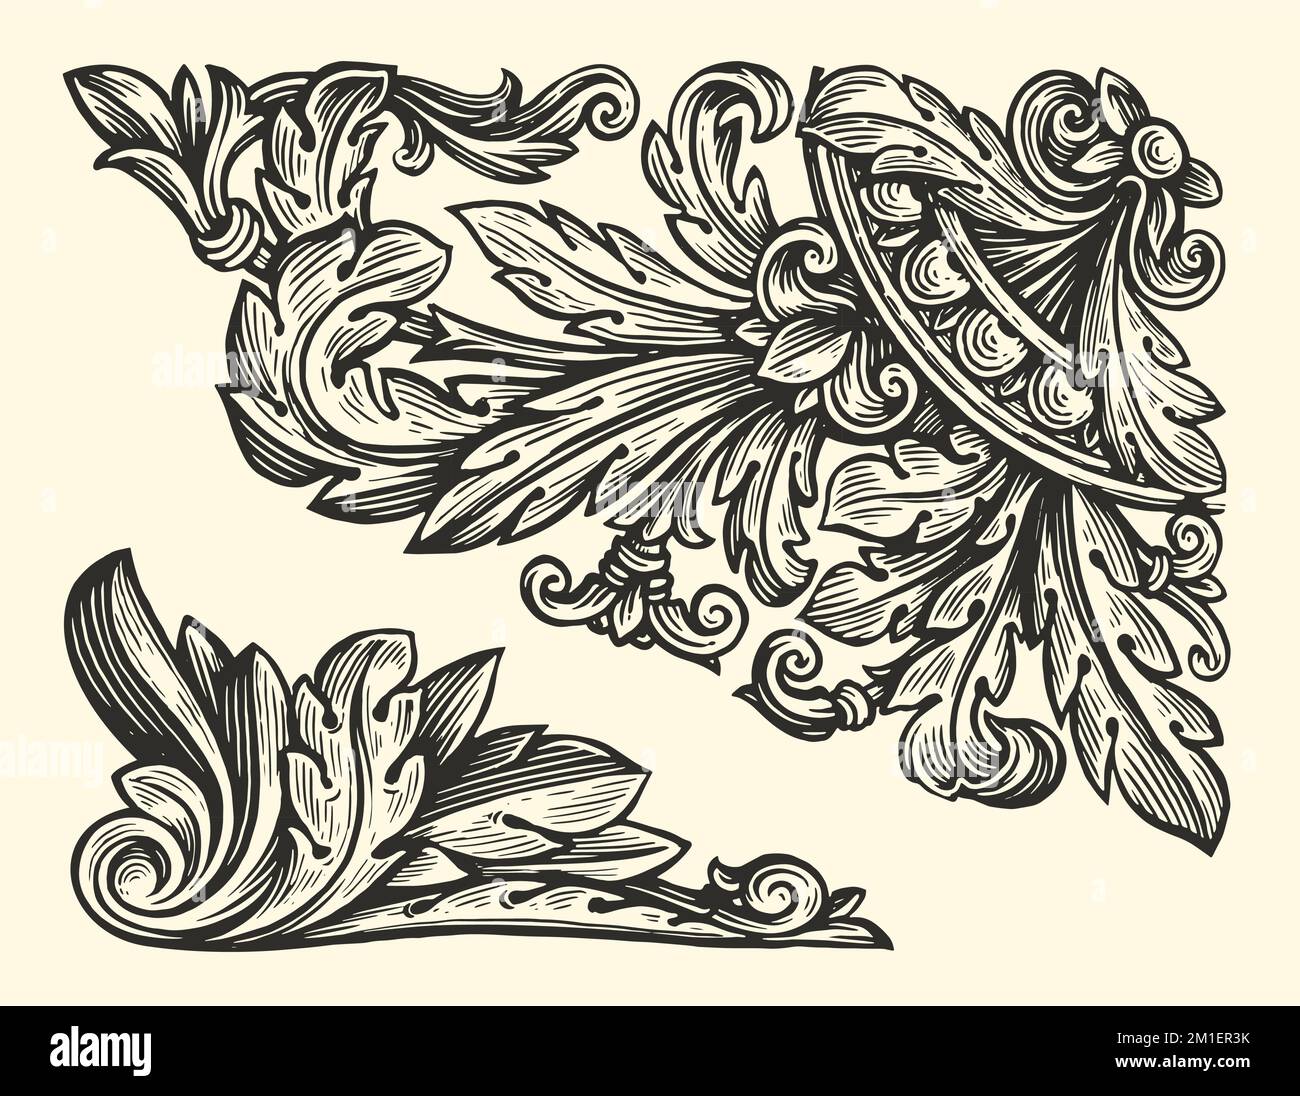 Decorative floral design elements. Ornate swirling floral motif. Pattern vector illustration in vintage engraving style Stock Vector